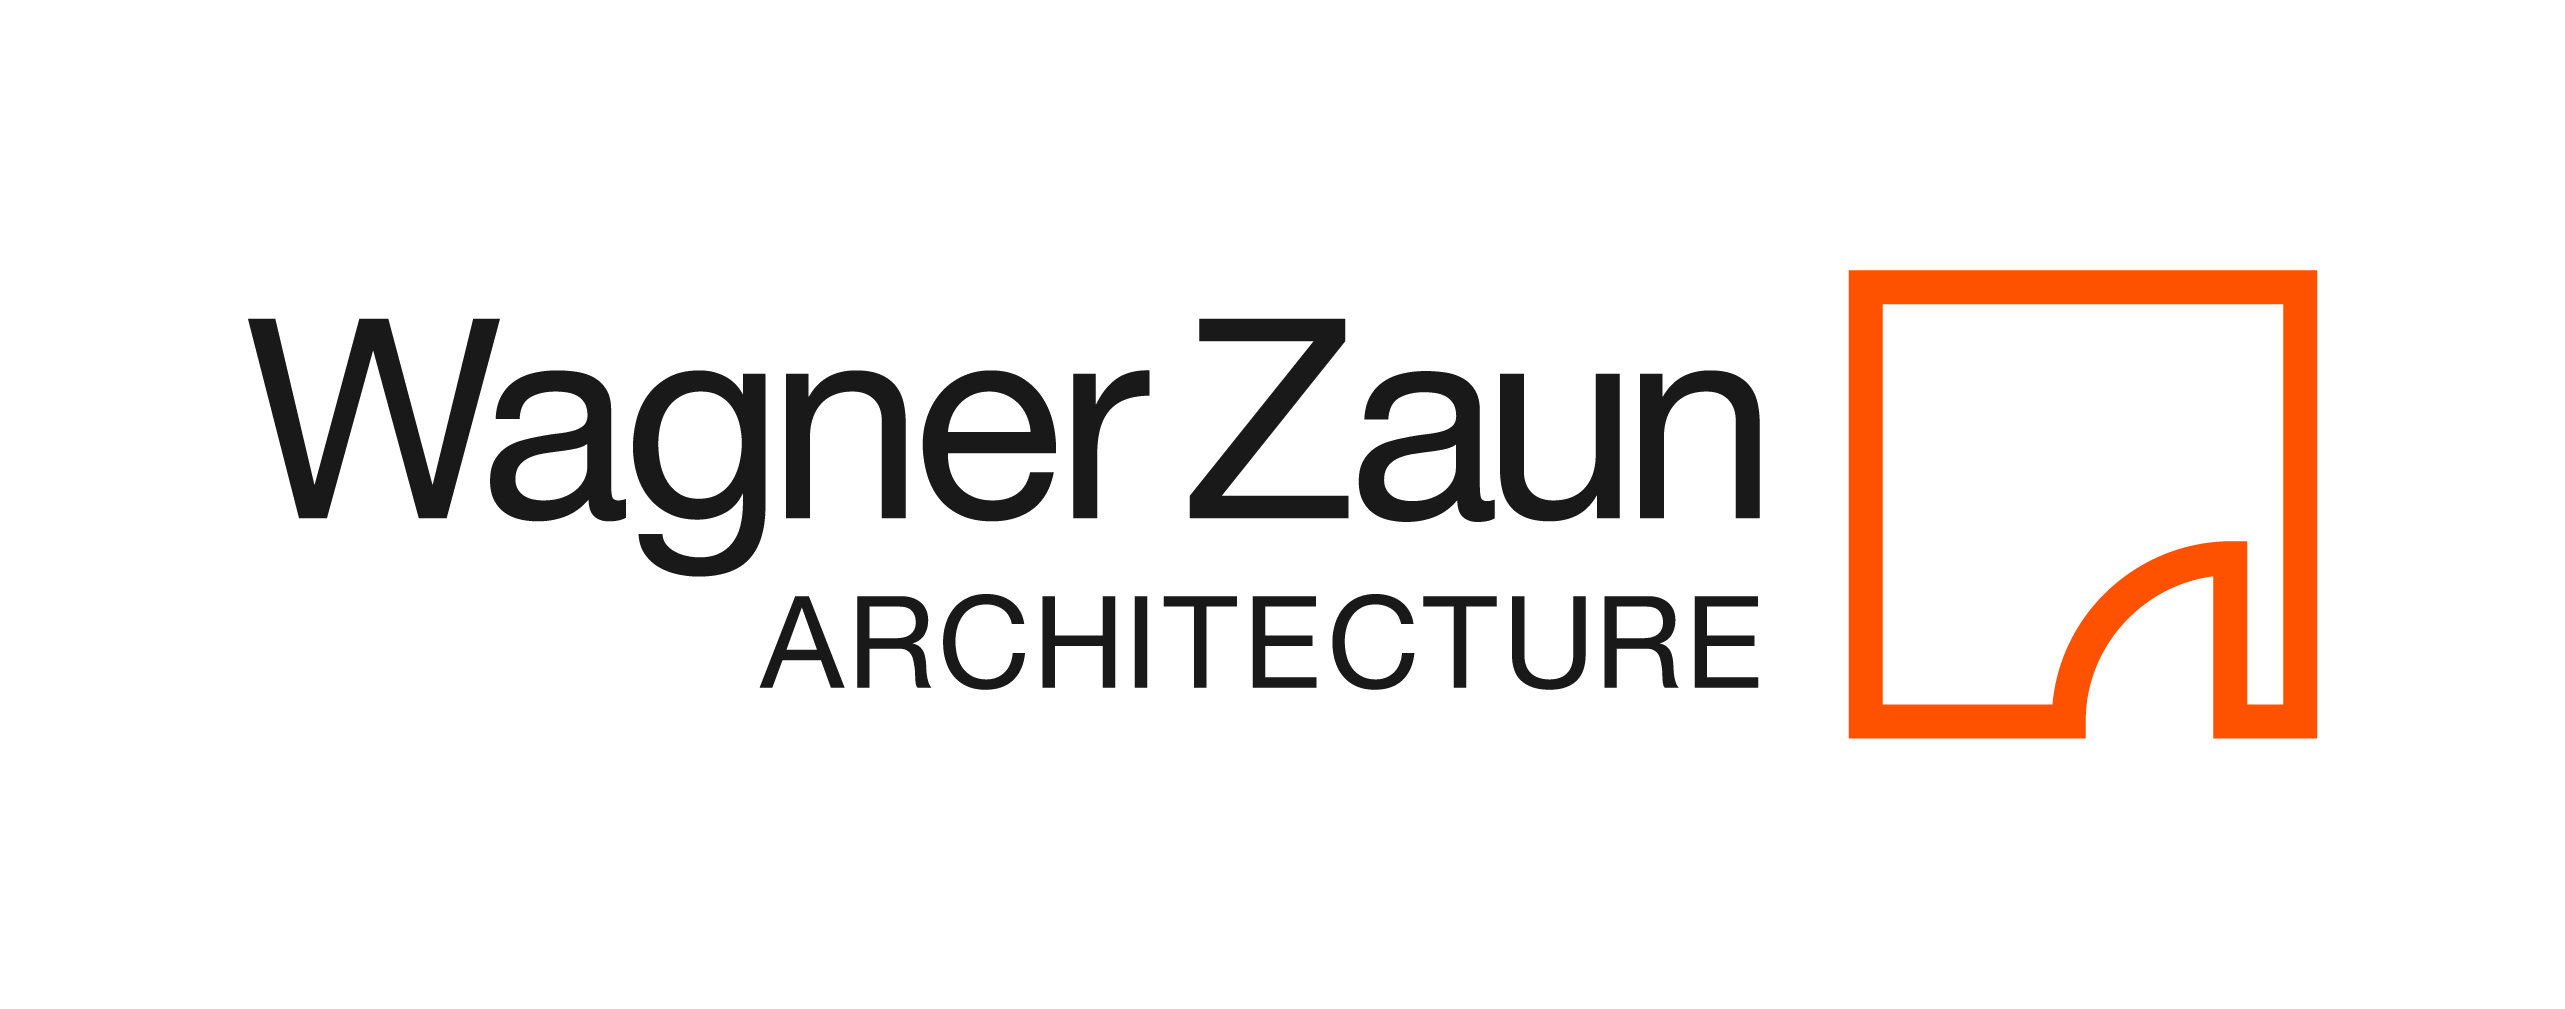 Wagner Zaun Architecture, Inc company logo